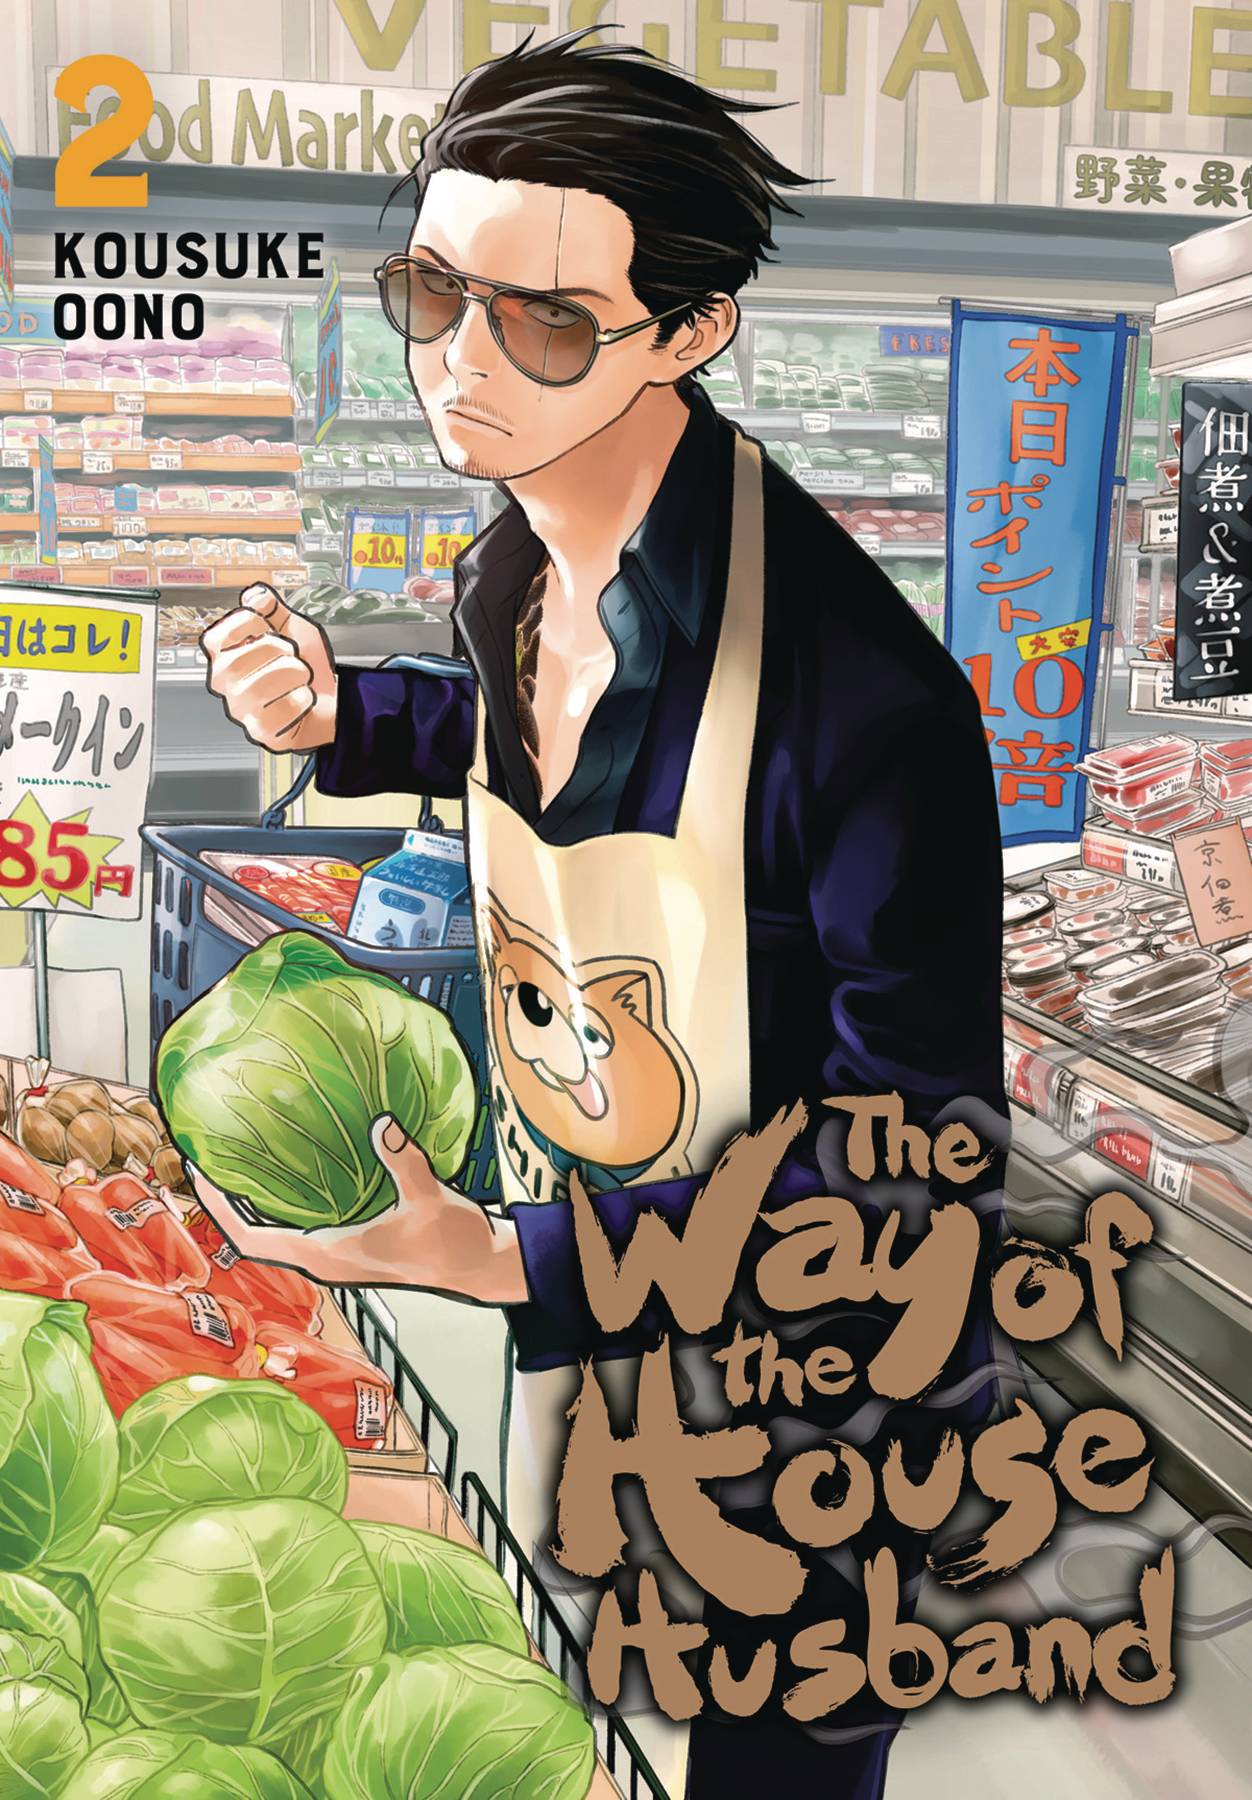 Way of the Househusband Manga Volume 2